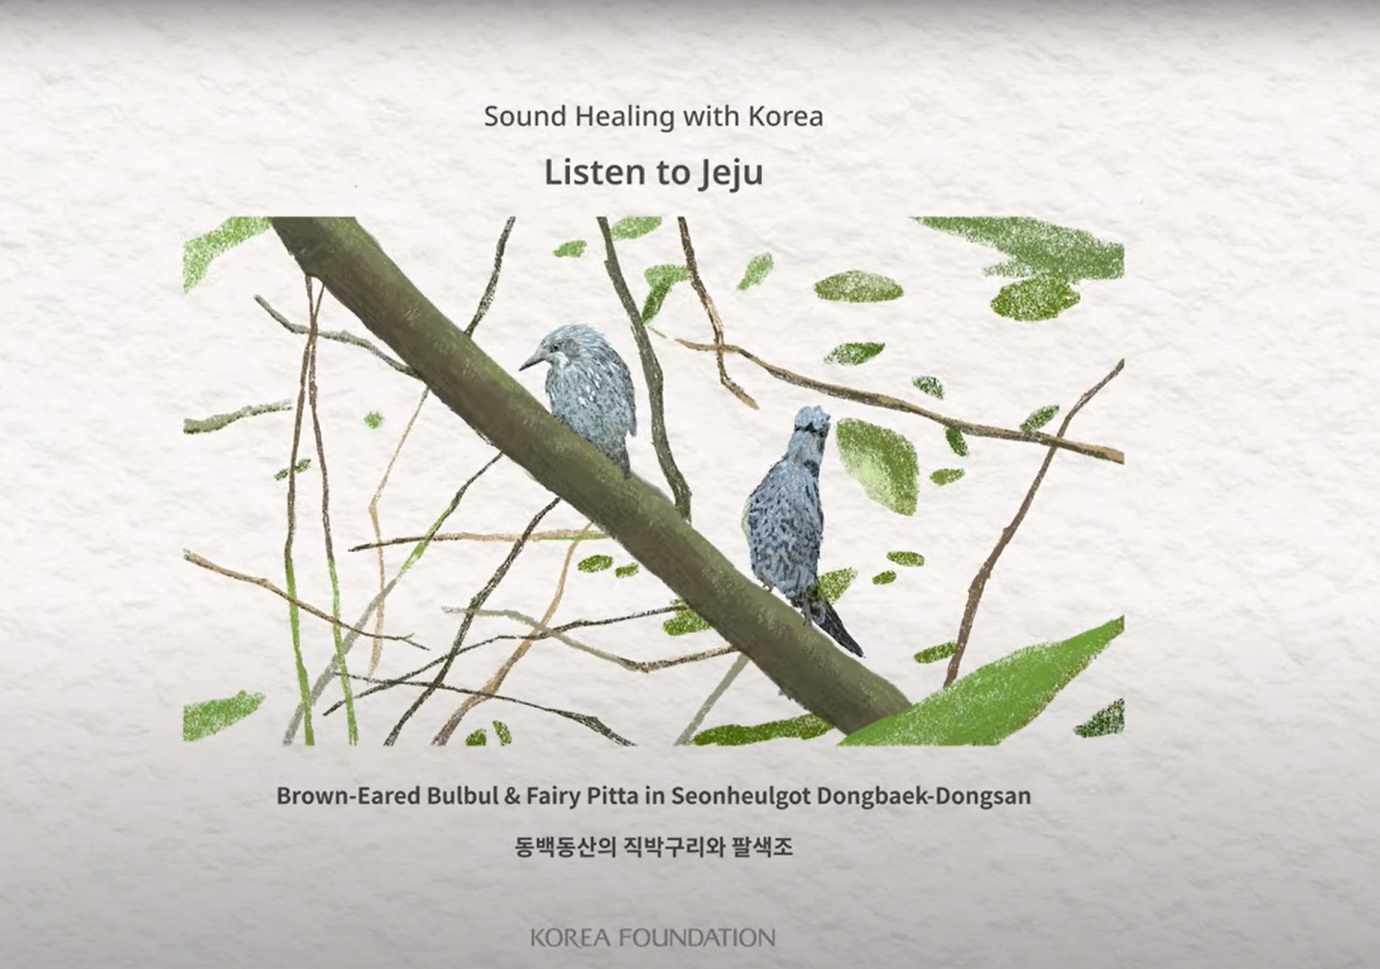 [ASMR] 2021 Sound Healing with Korea - Listen to Jeju | 1. Brown-Eared Bulbul & Fairy Pitta